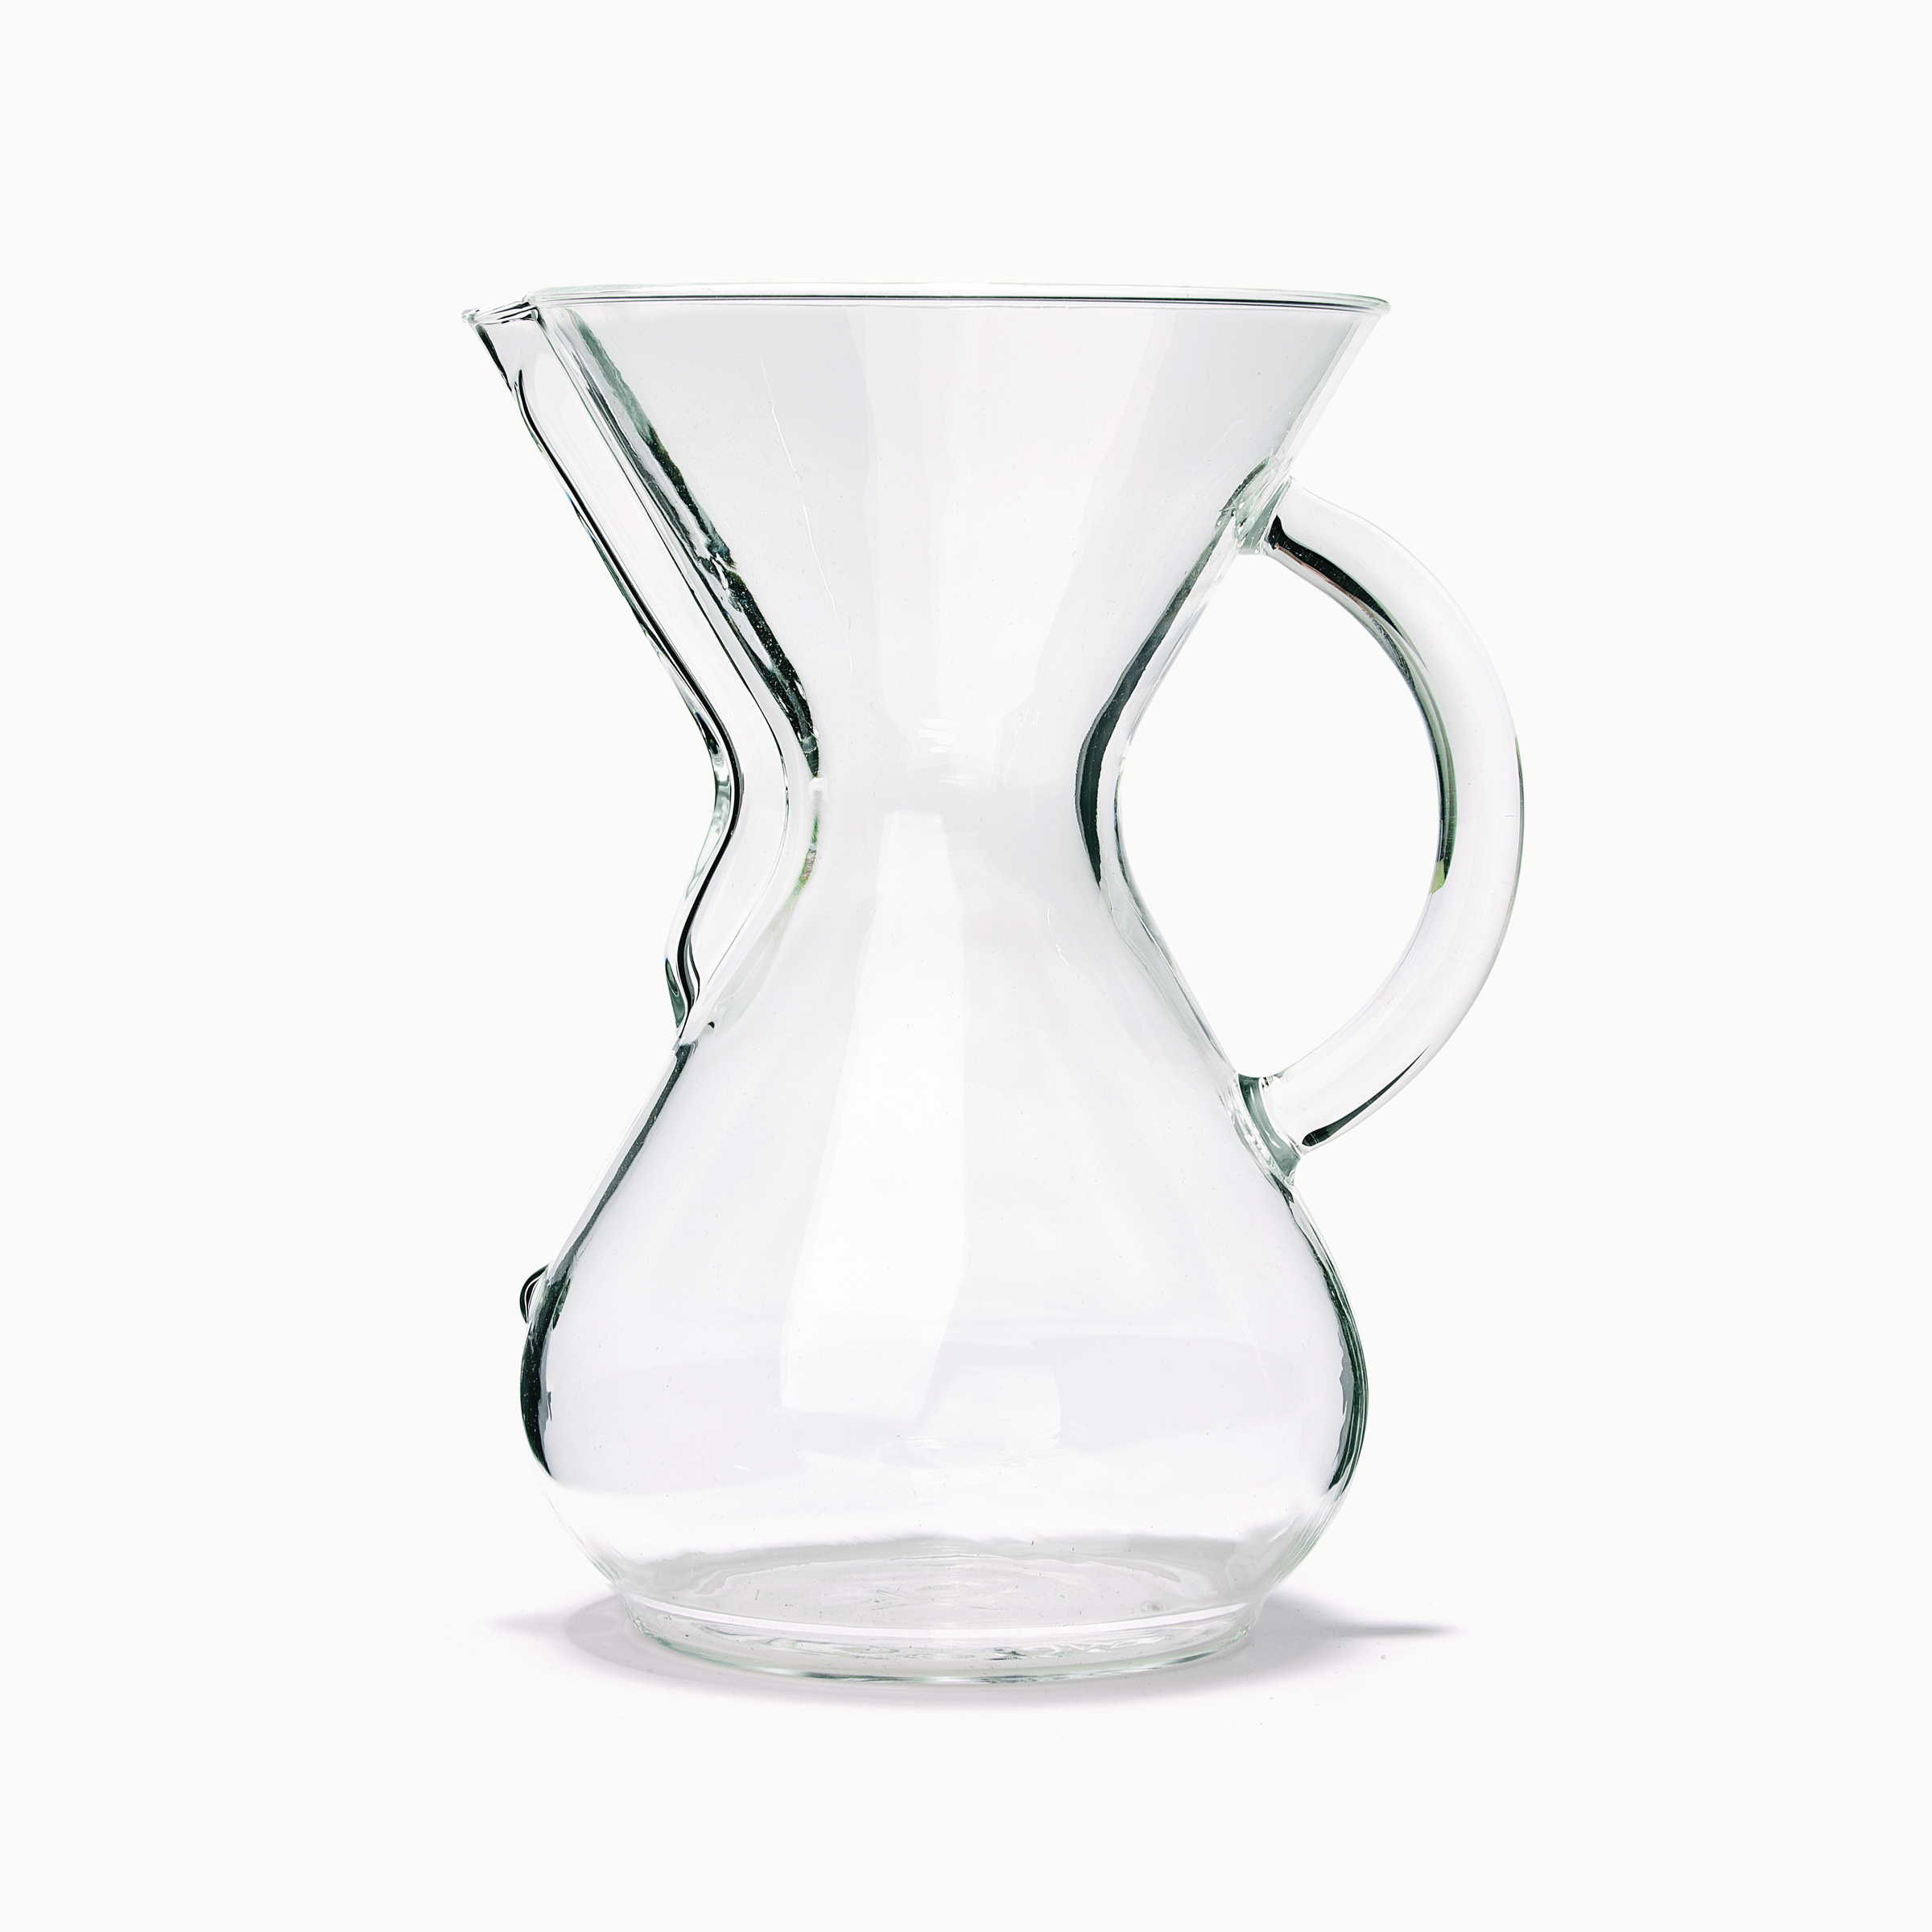 CHEMEX® Six Cup Glass Handle – Chemex Canada